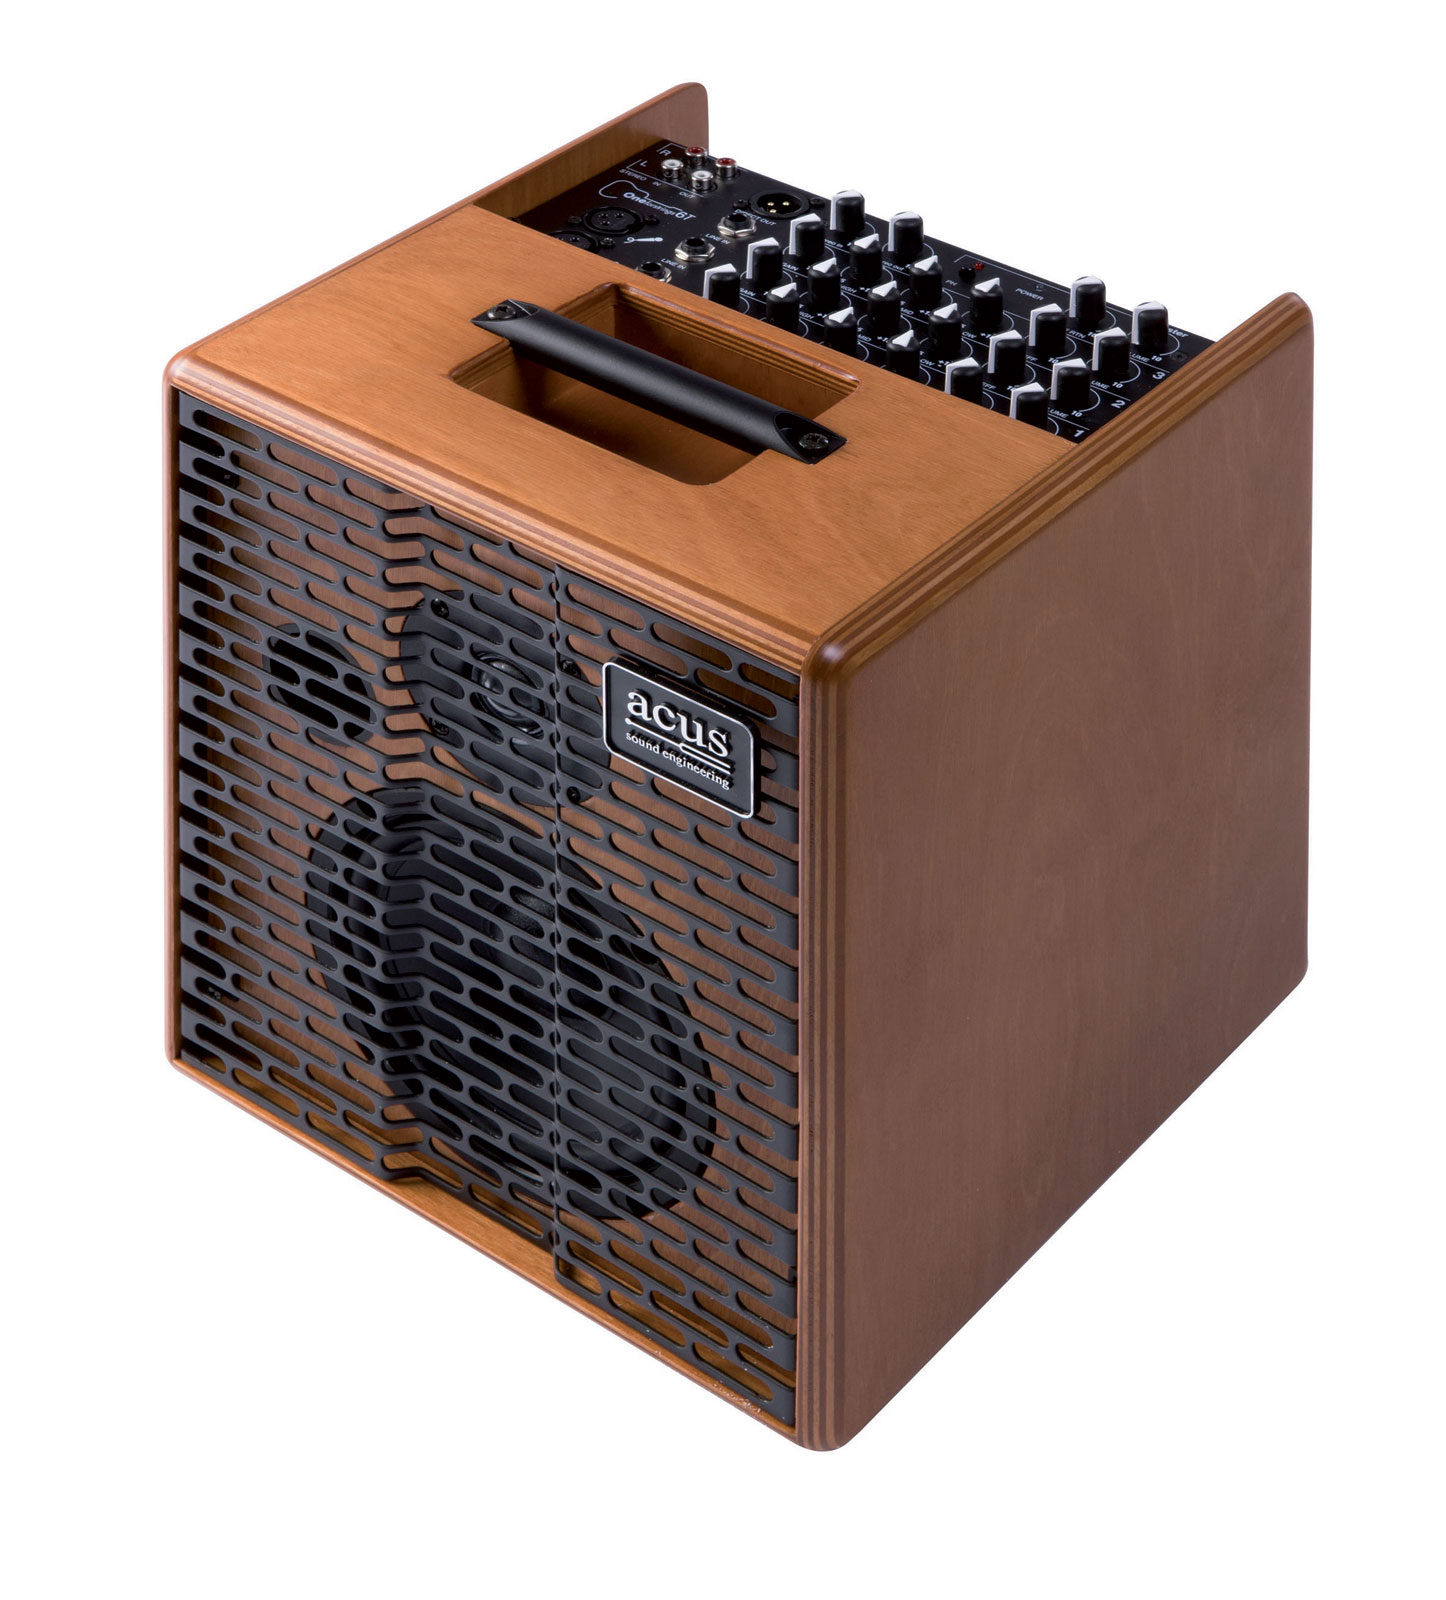 Acus One Forstrings 5t - Wood - Combo amplificador acústico - Variation 1